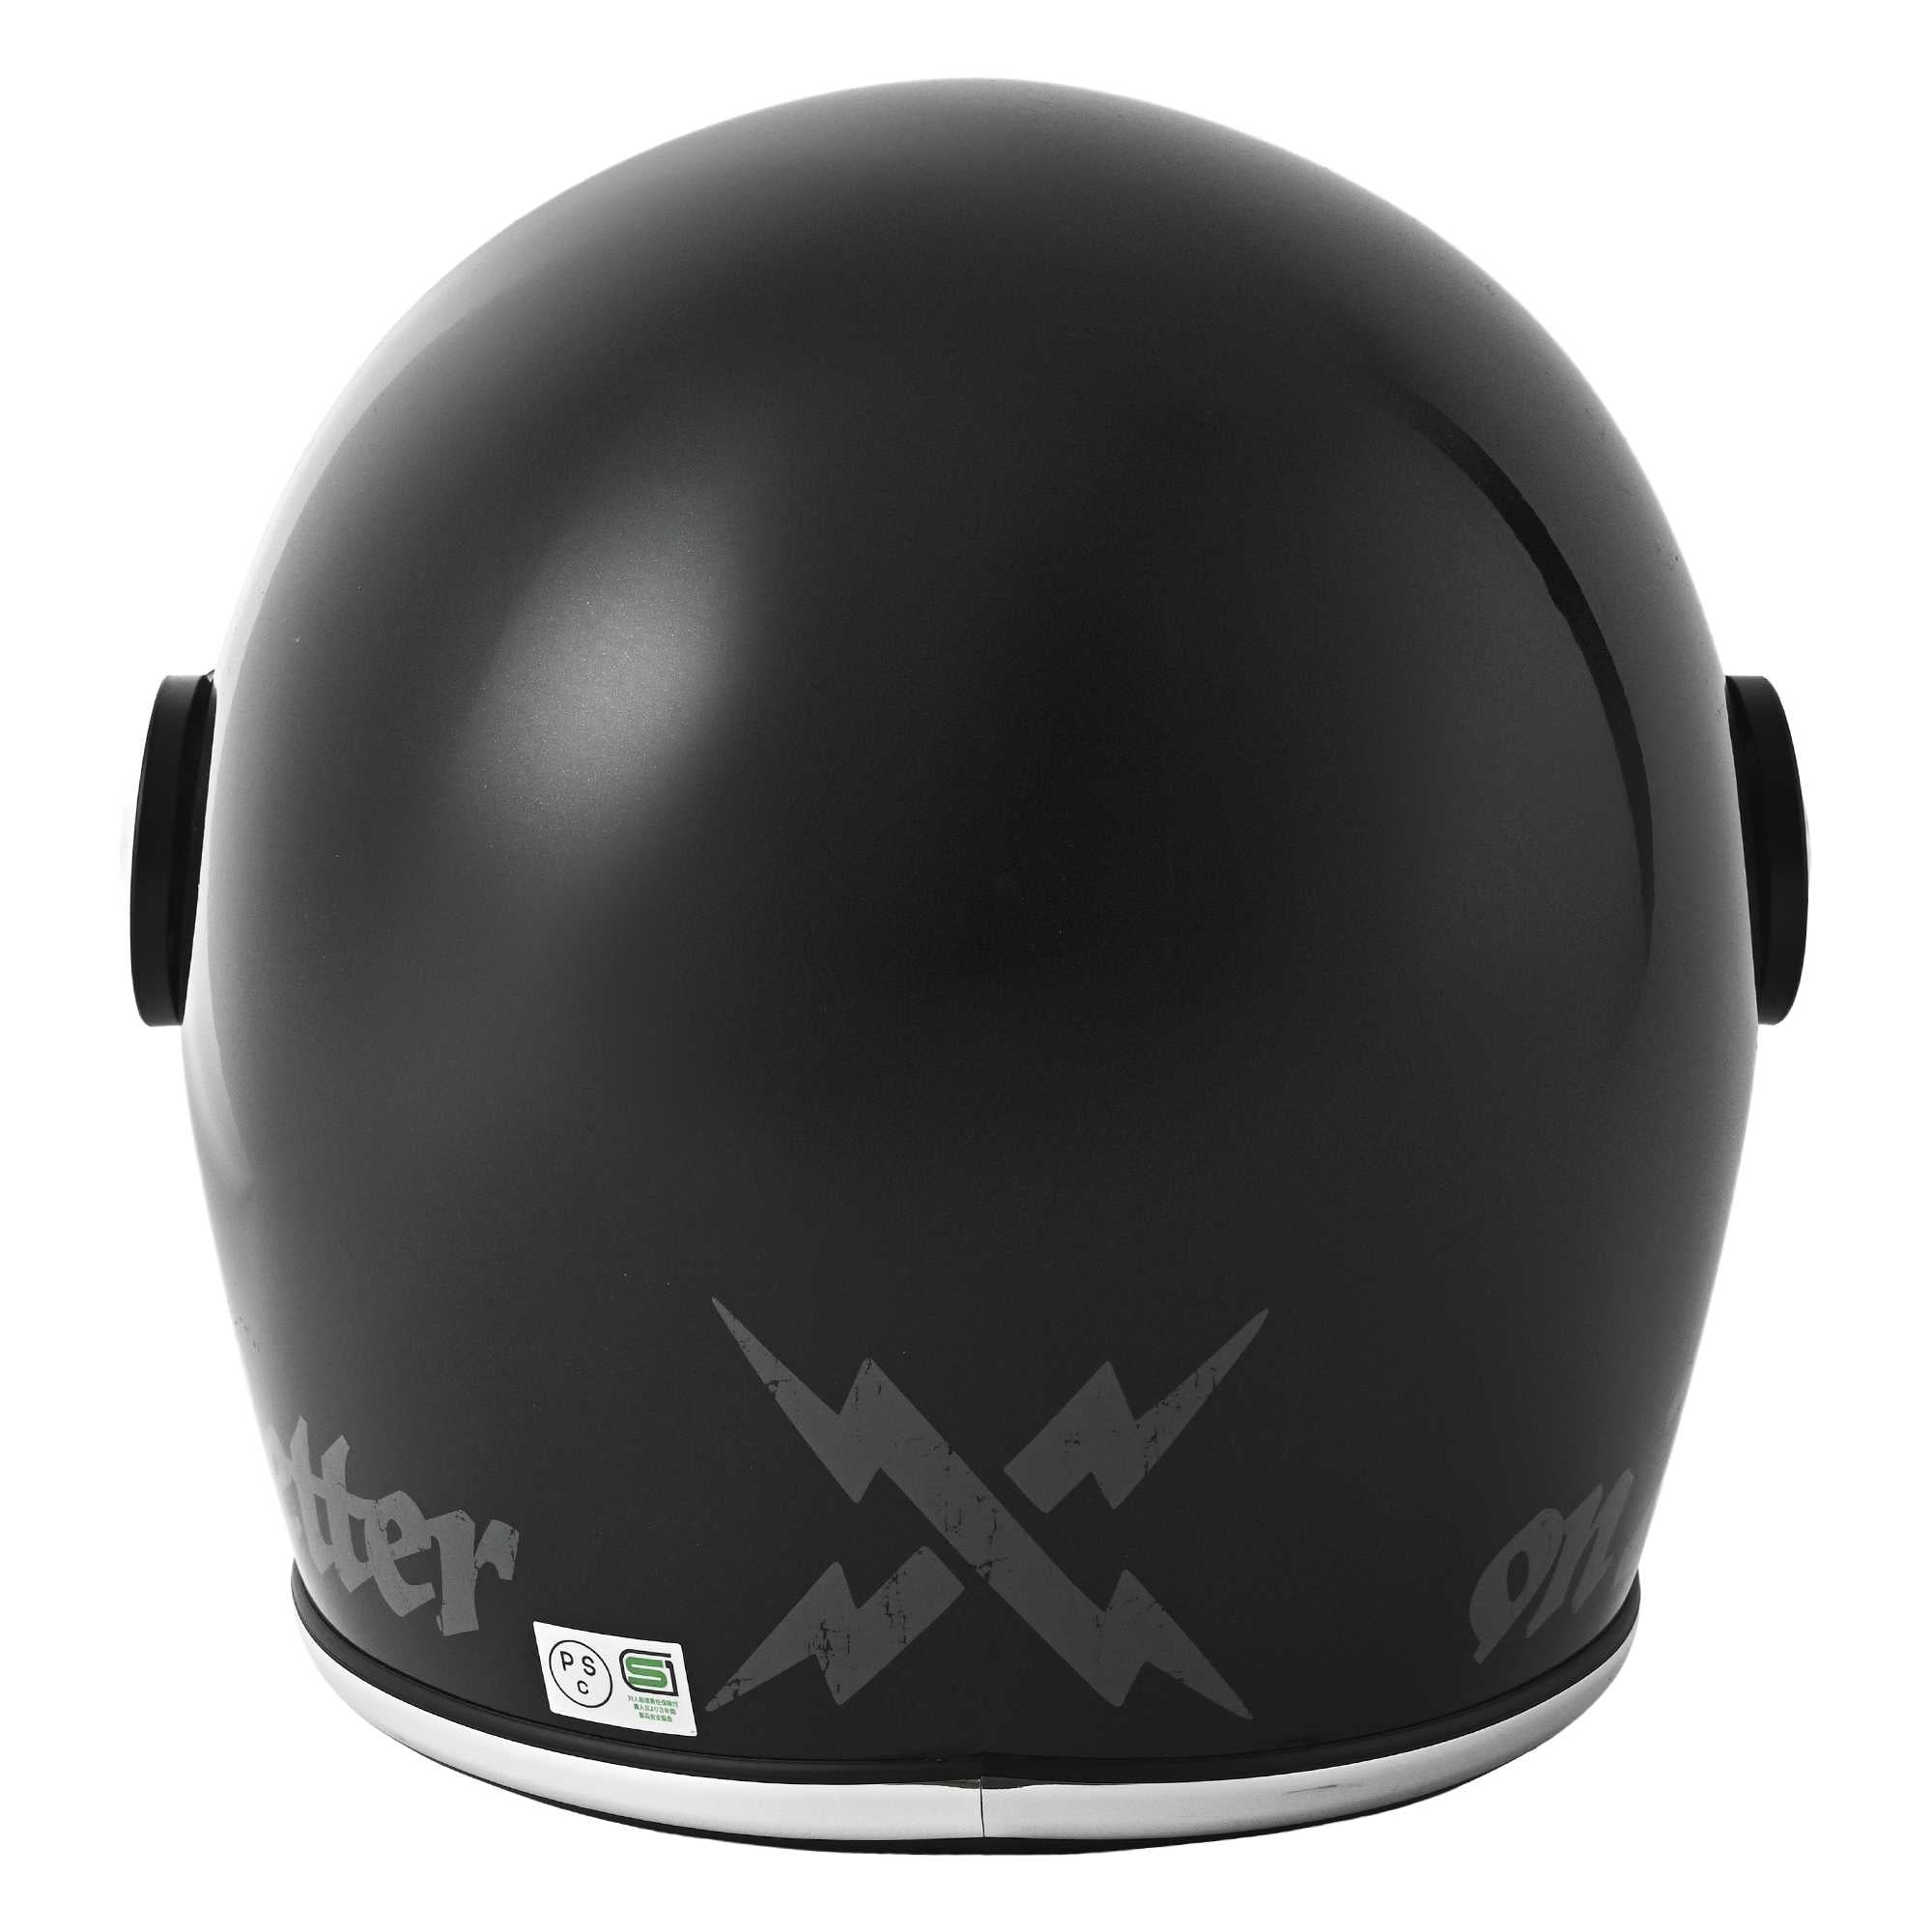 RIDEZ X HELMET Limited Quantity Model 2WHEEL'S LIFE Full Face Motorcycle Helmet 